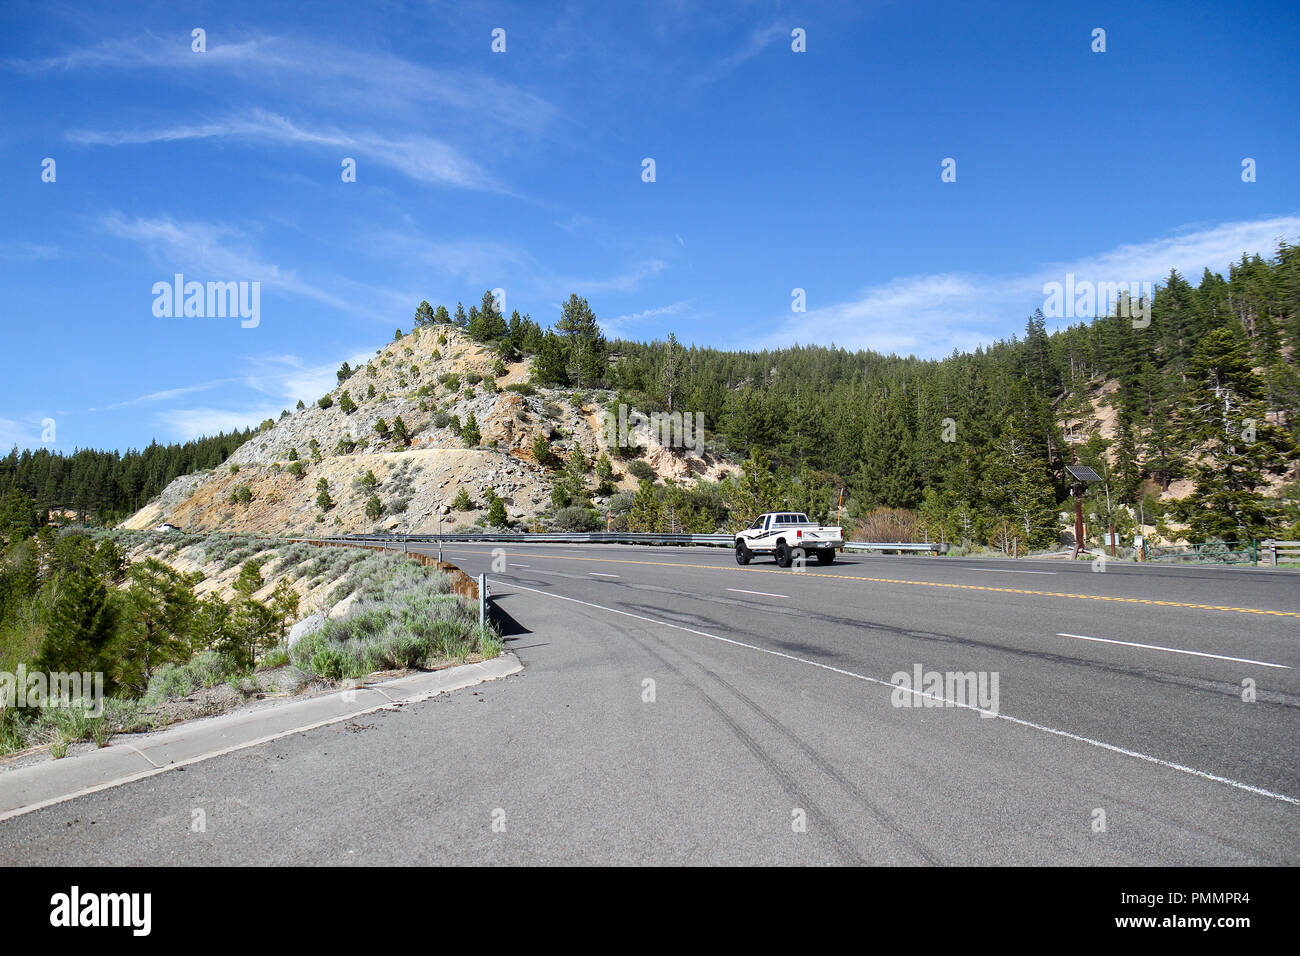 On the road near Lake Tahoe, Nevada, United States Stock Photo